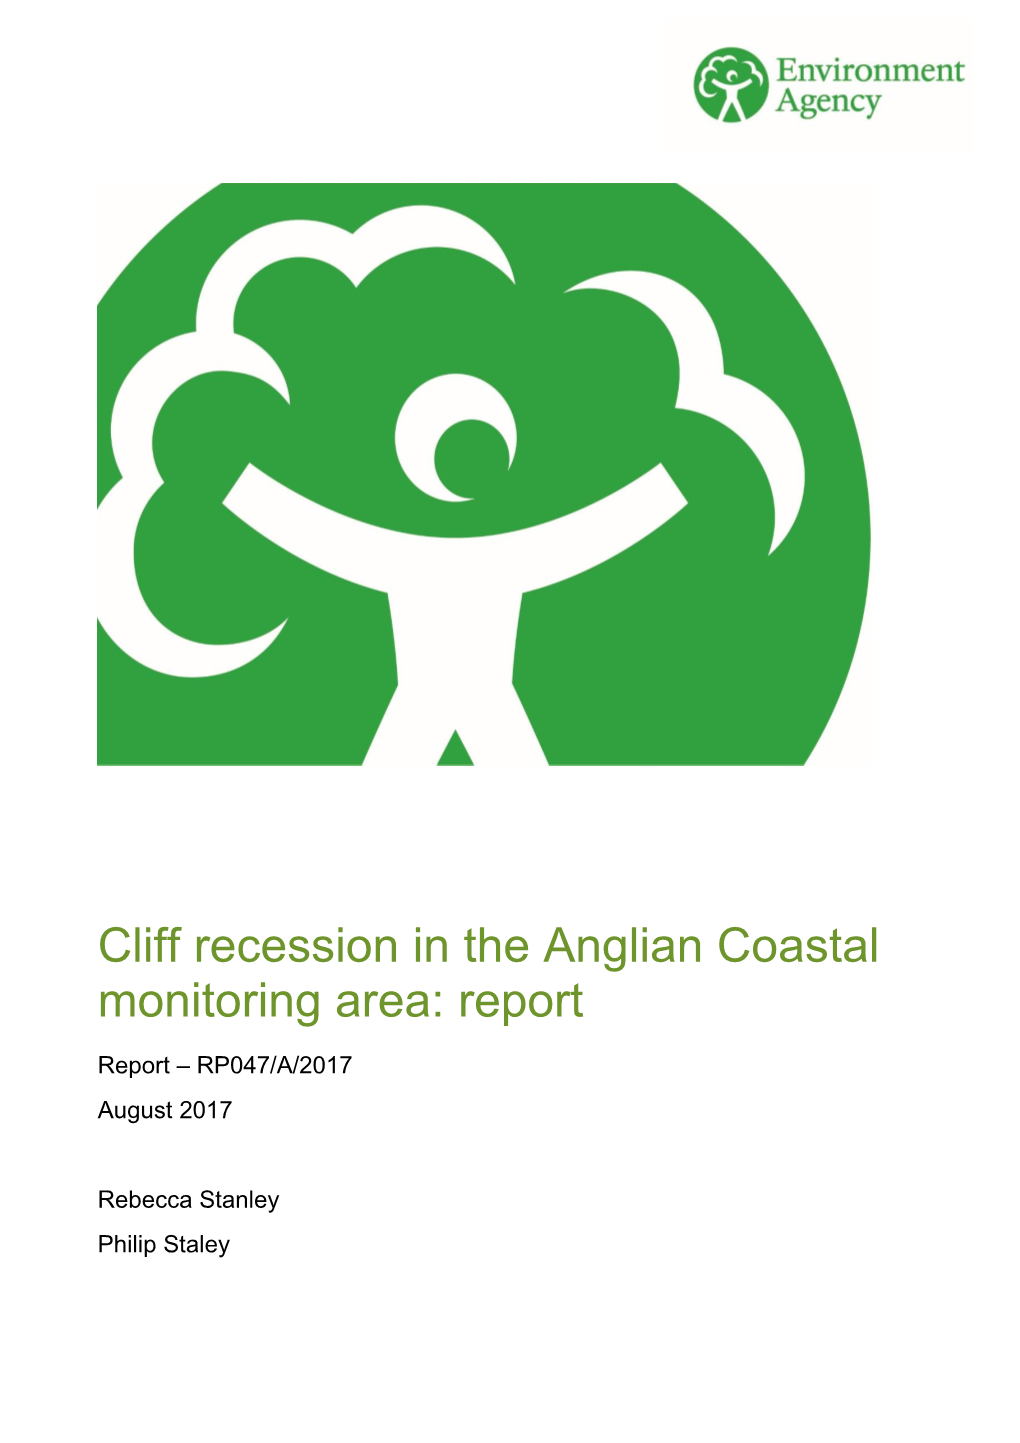 Cliff Recession in the Anglian Coastal Monitoring Area: Report